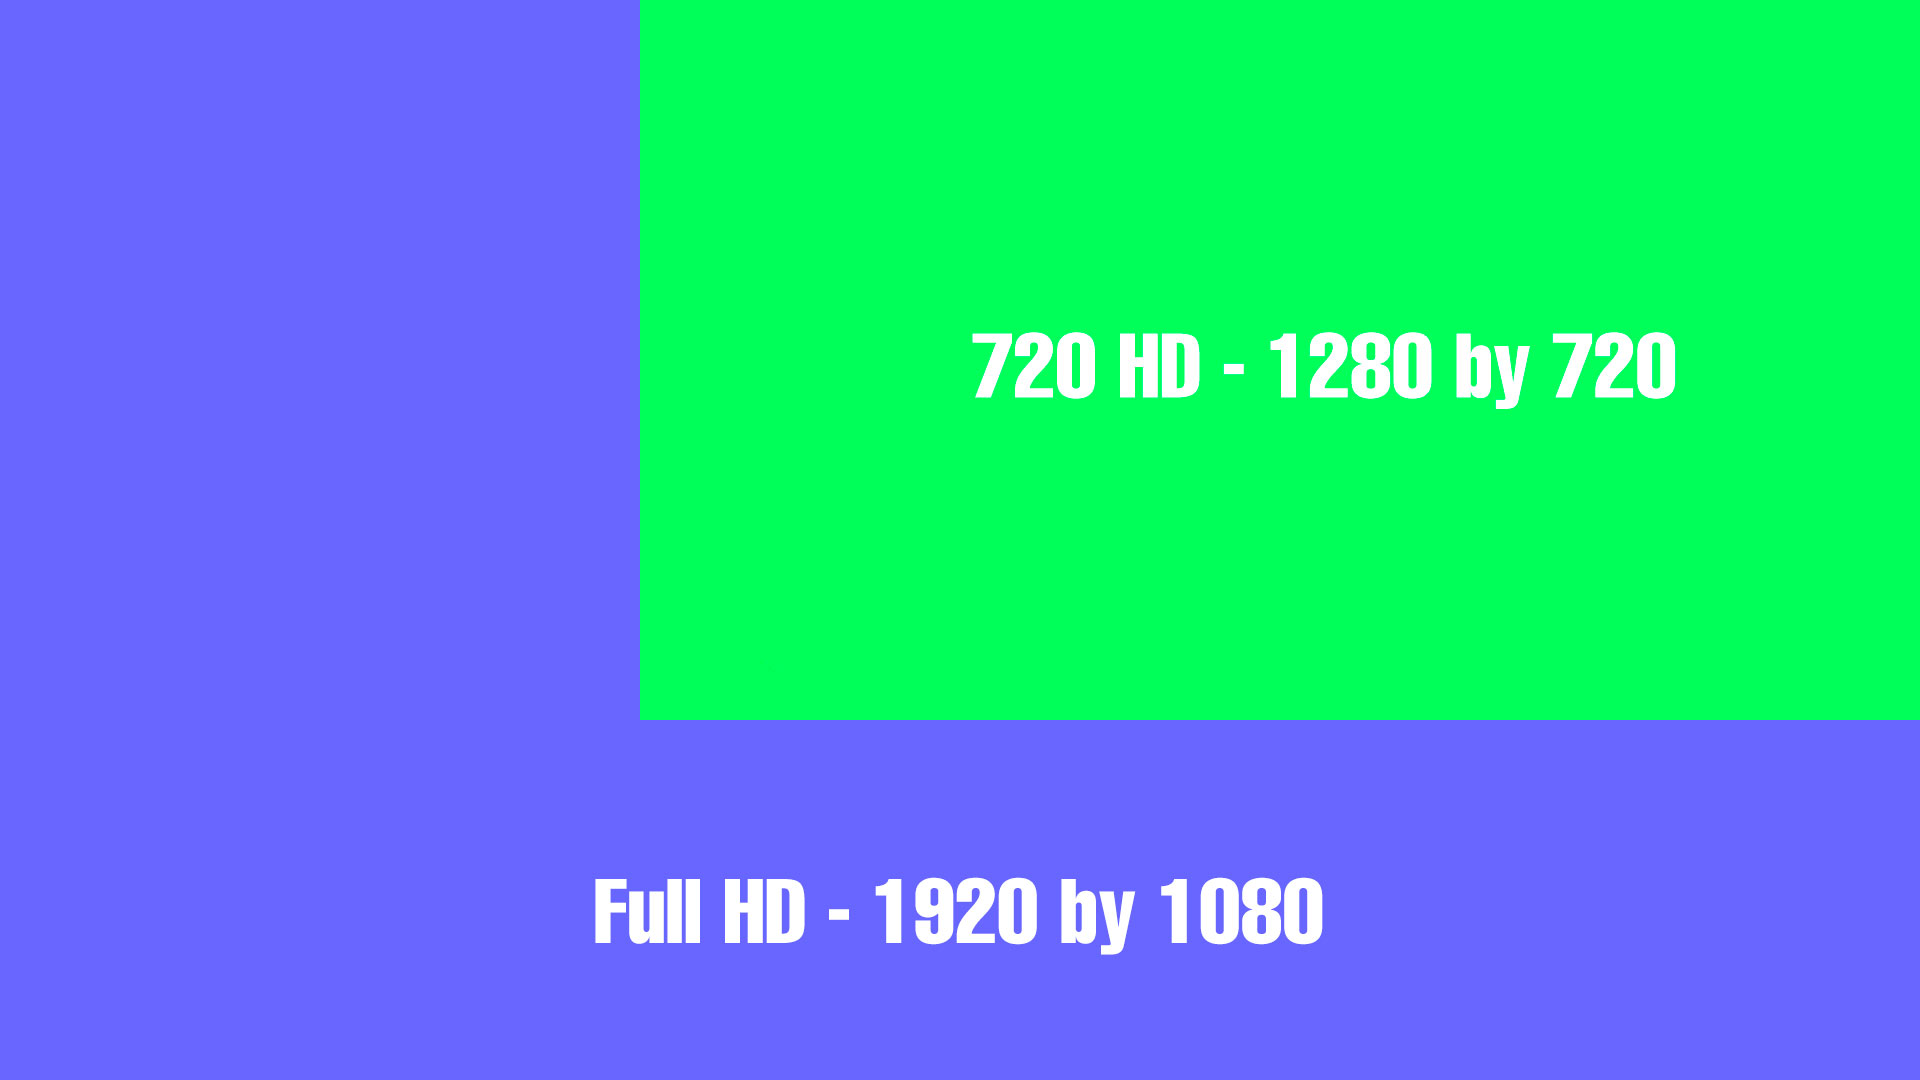 HD video resolution